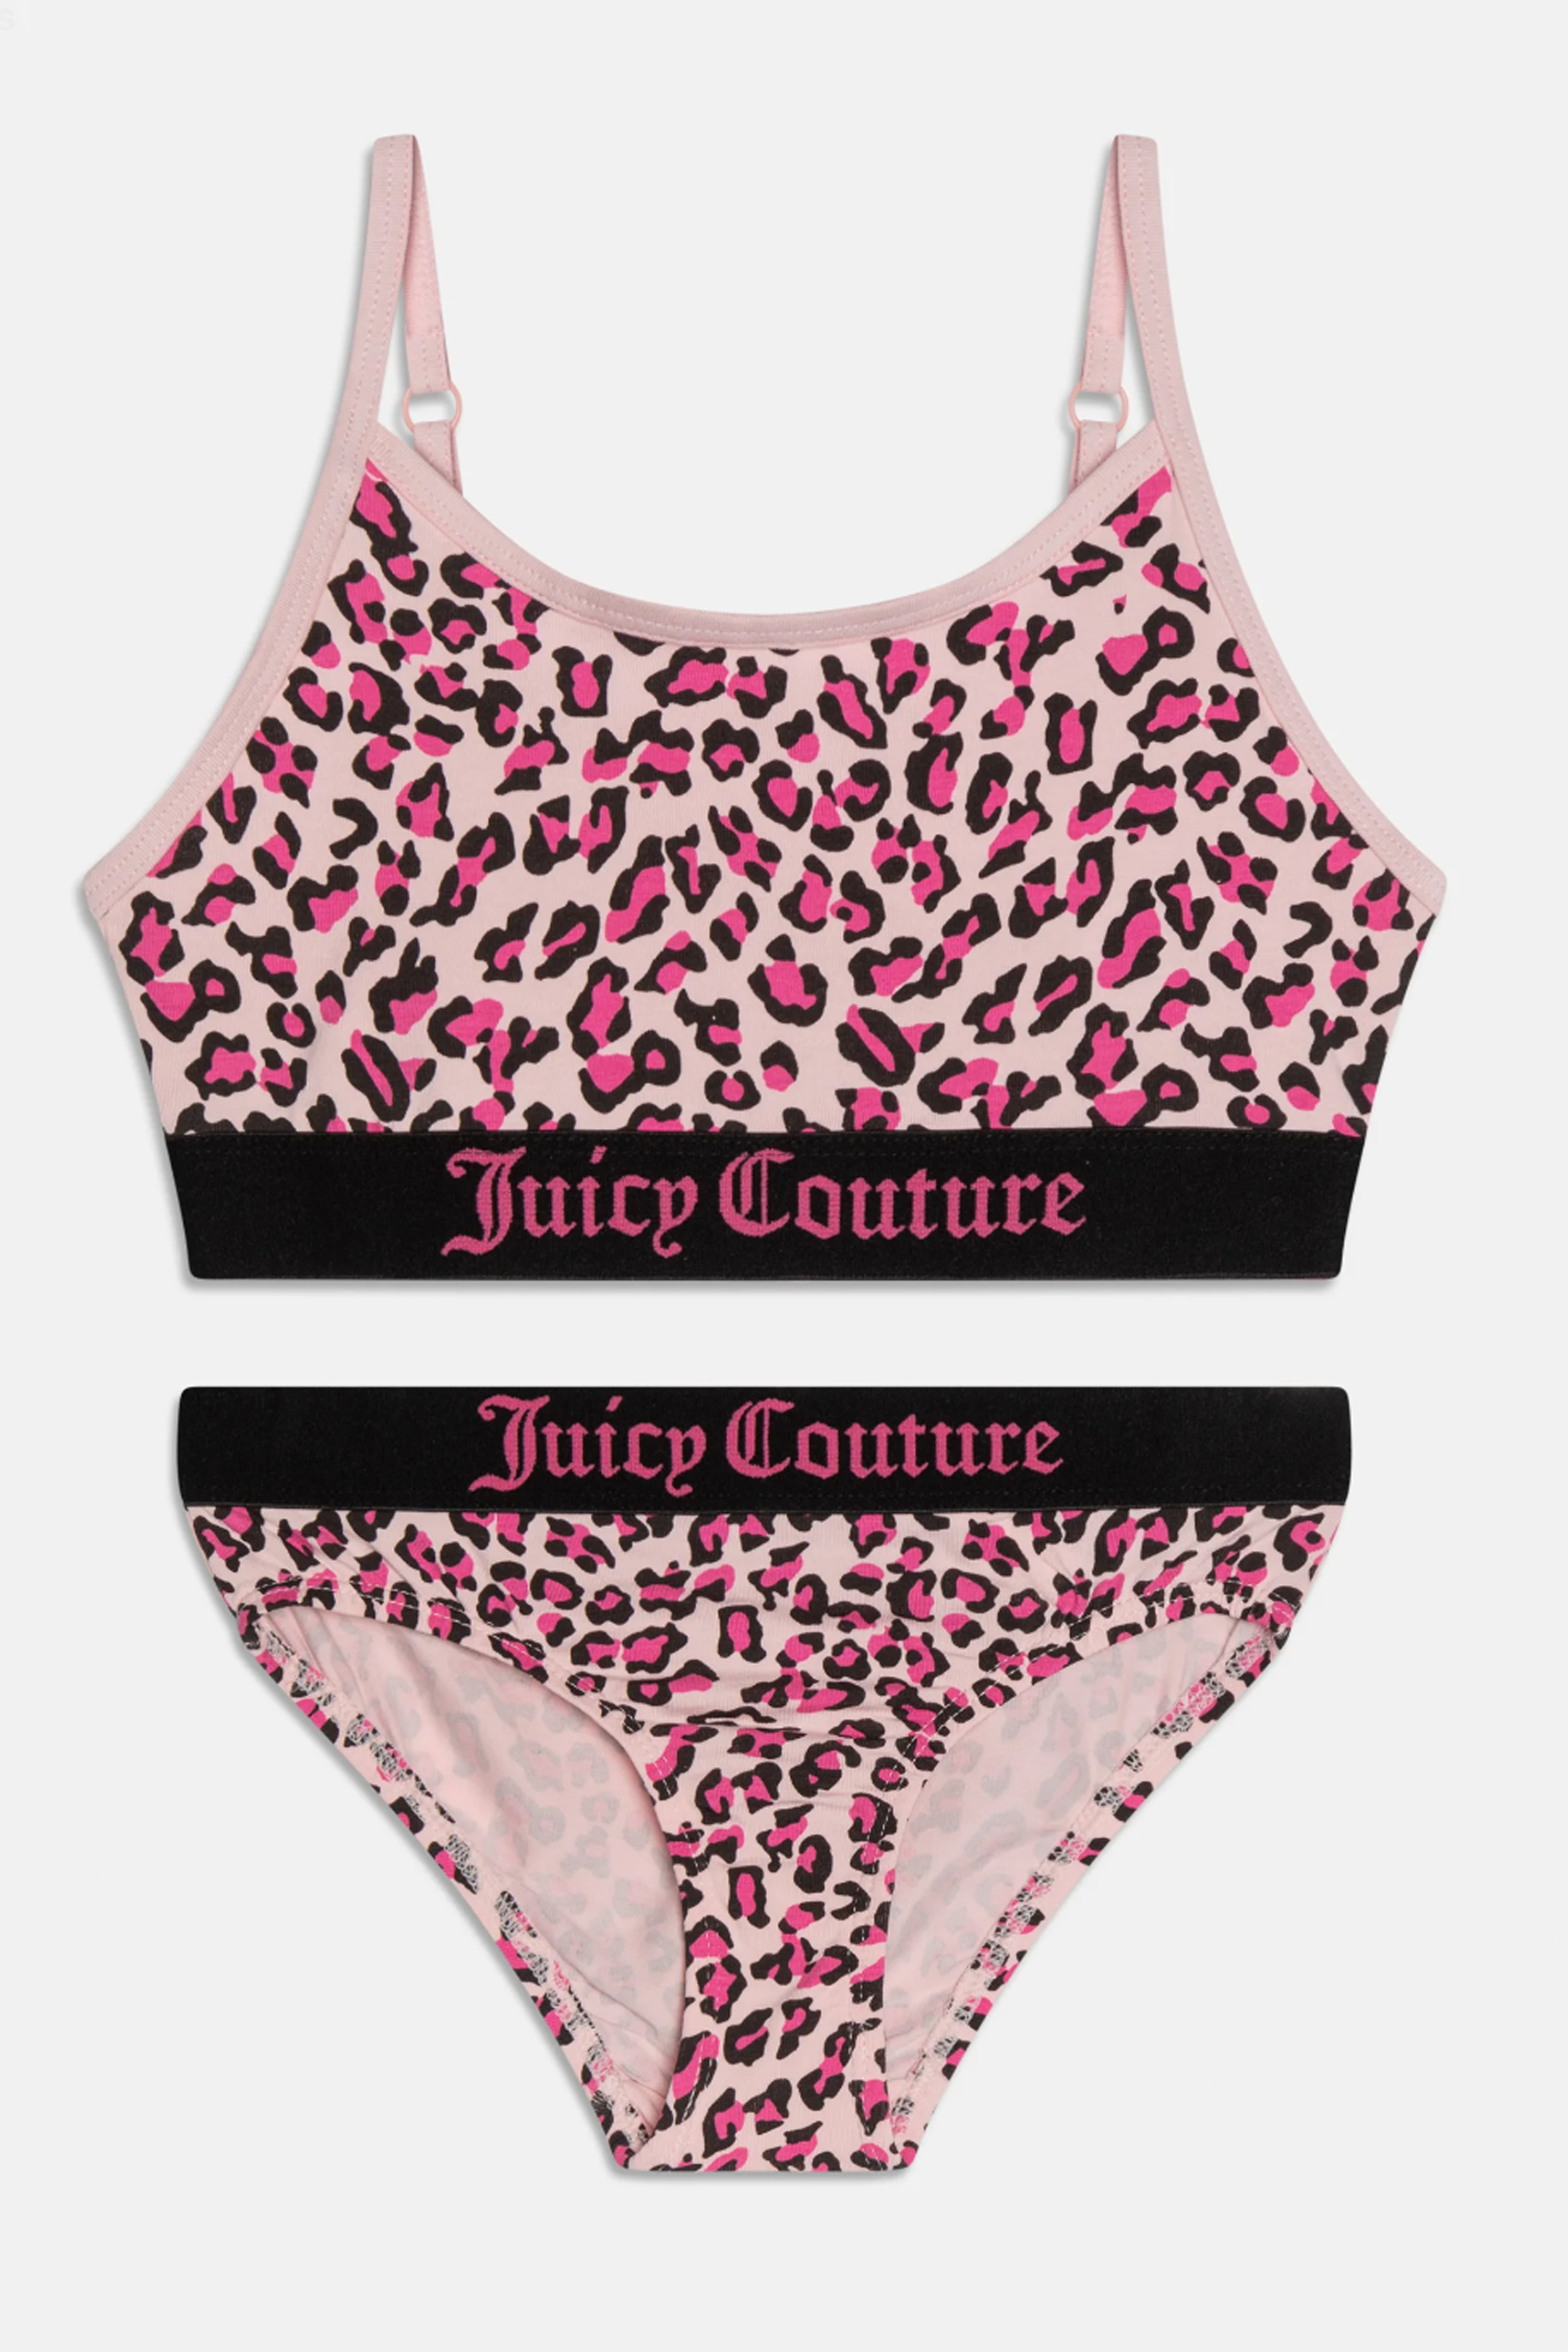 Juicy Couture Animal Print Panties for Women